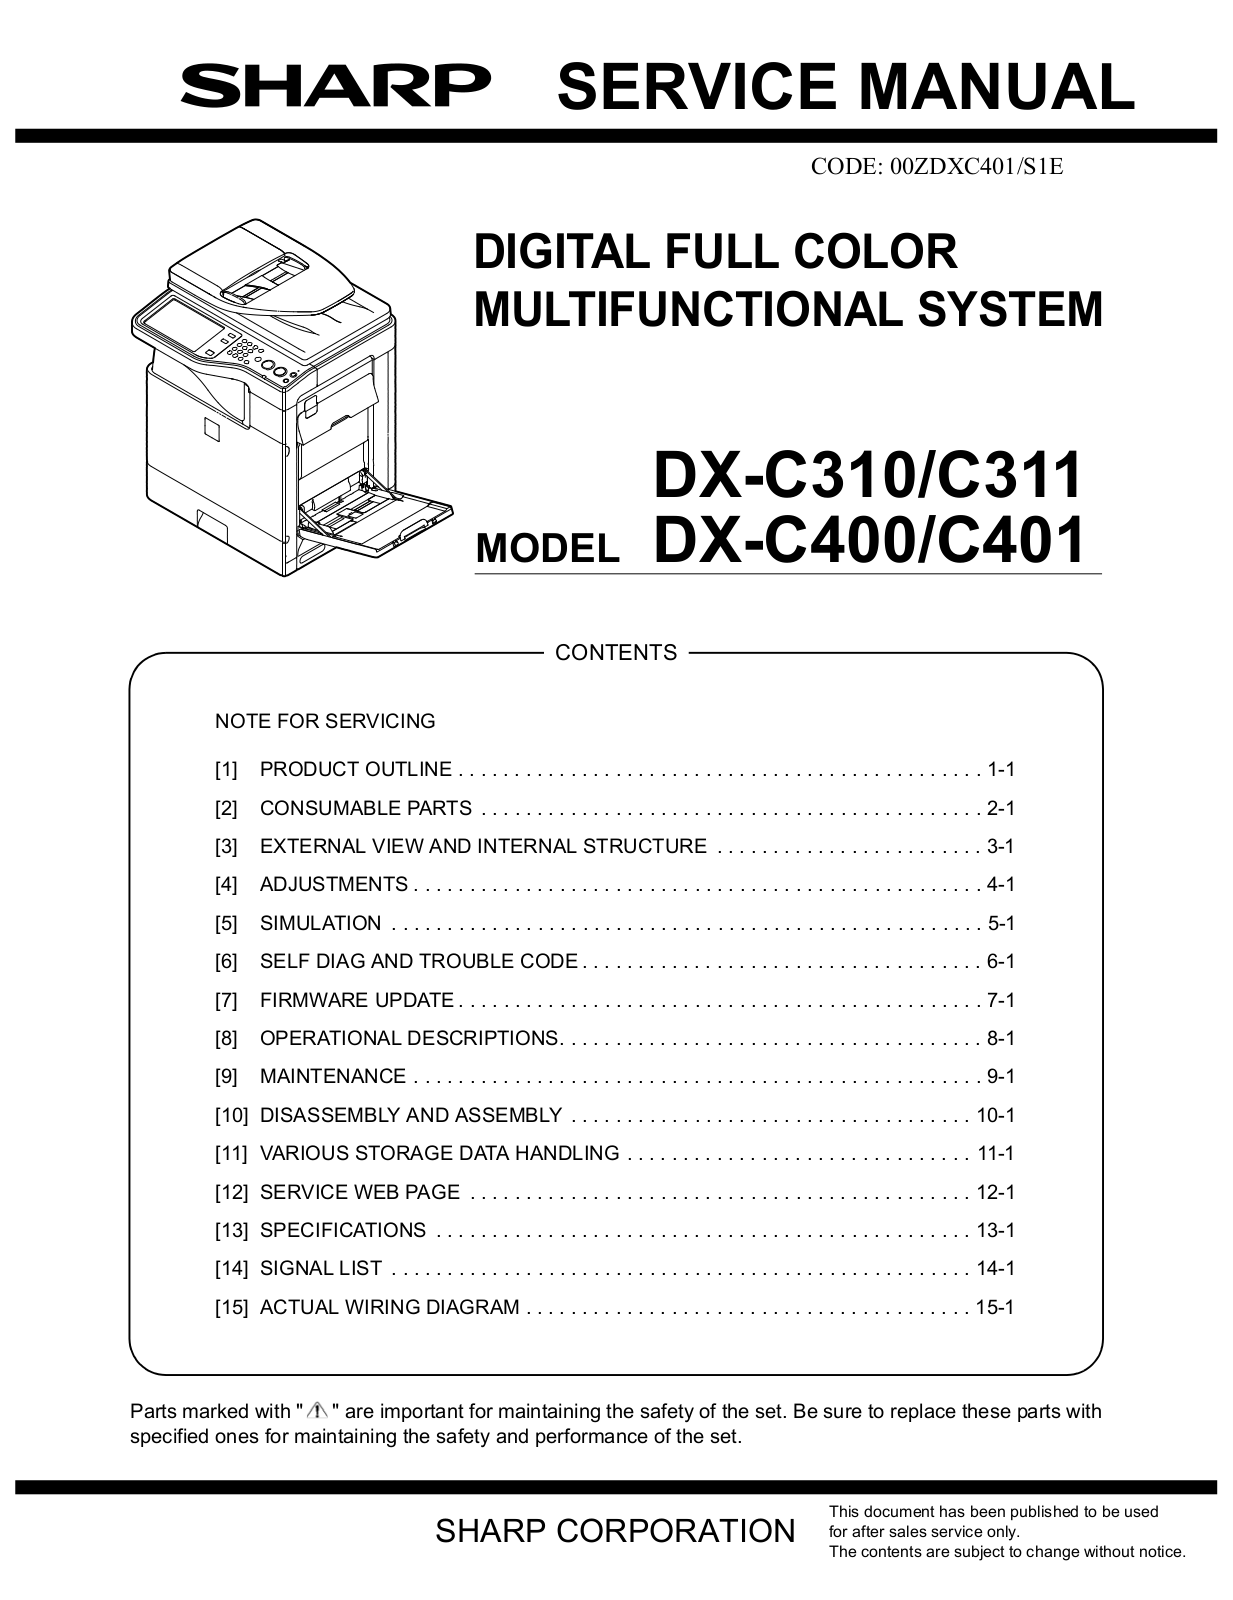 Sharp DX-C310, C311, DX-C400, C401 Service Manual